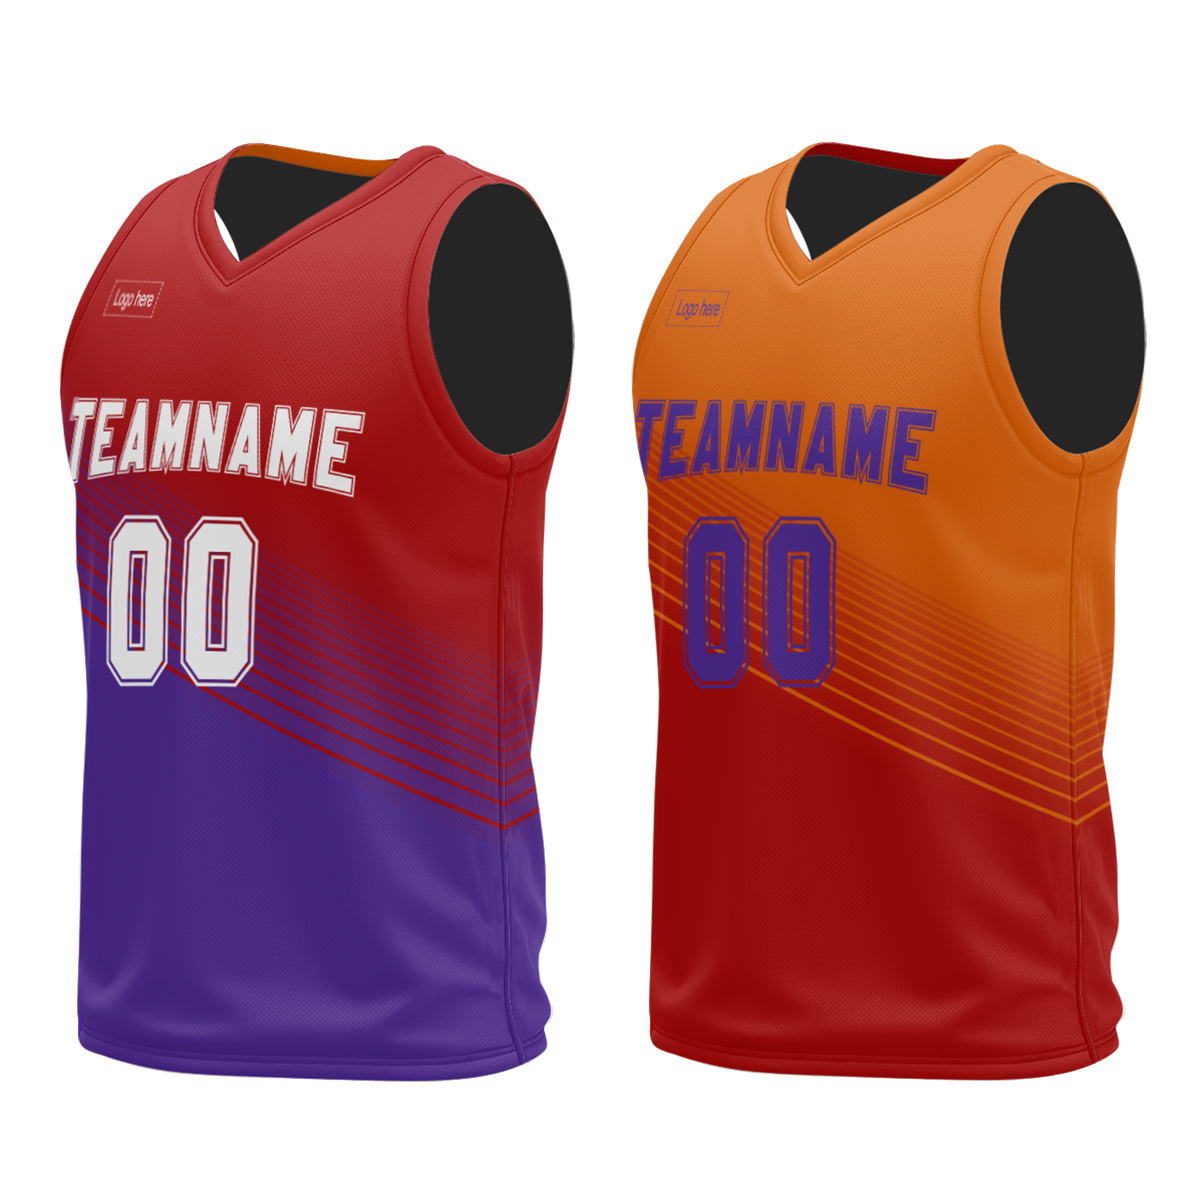 custom-sports-uniform-jerseys-printed-sublimation-reversible-athletic-team-basketball-vest-jersey-wear-for-men-women-at-cj-pod-5